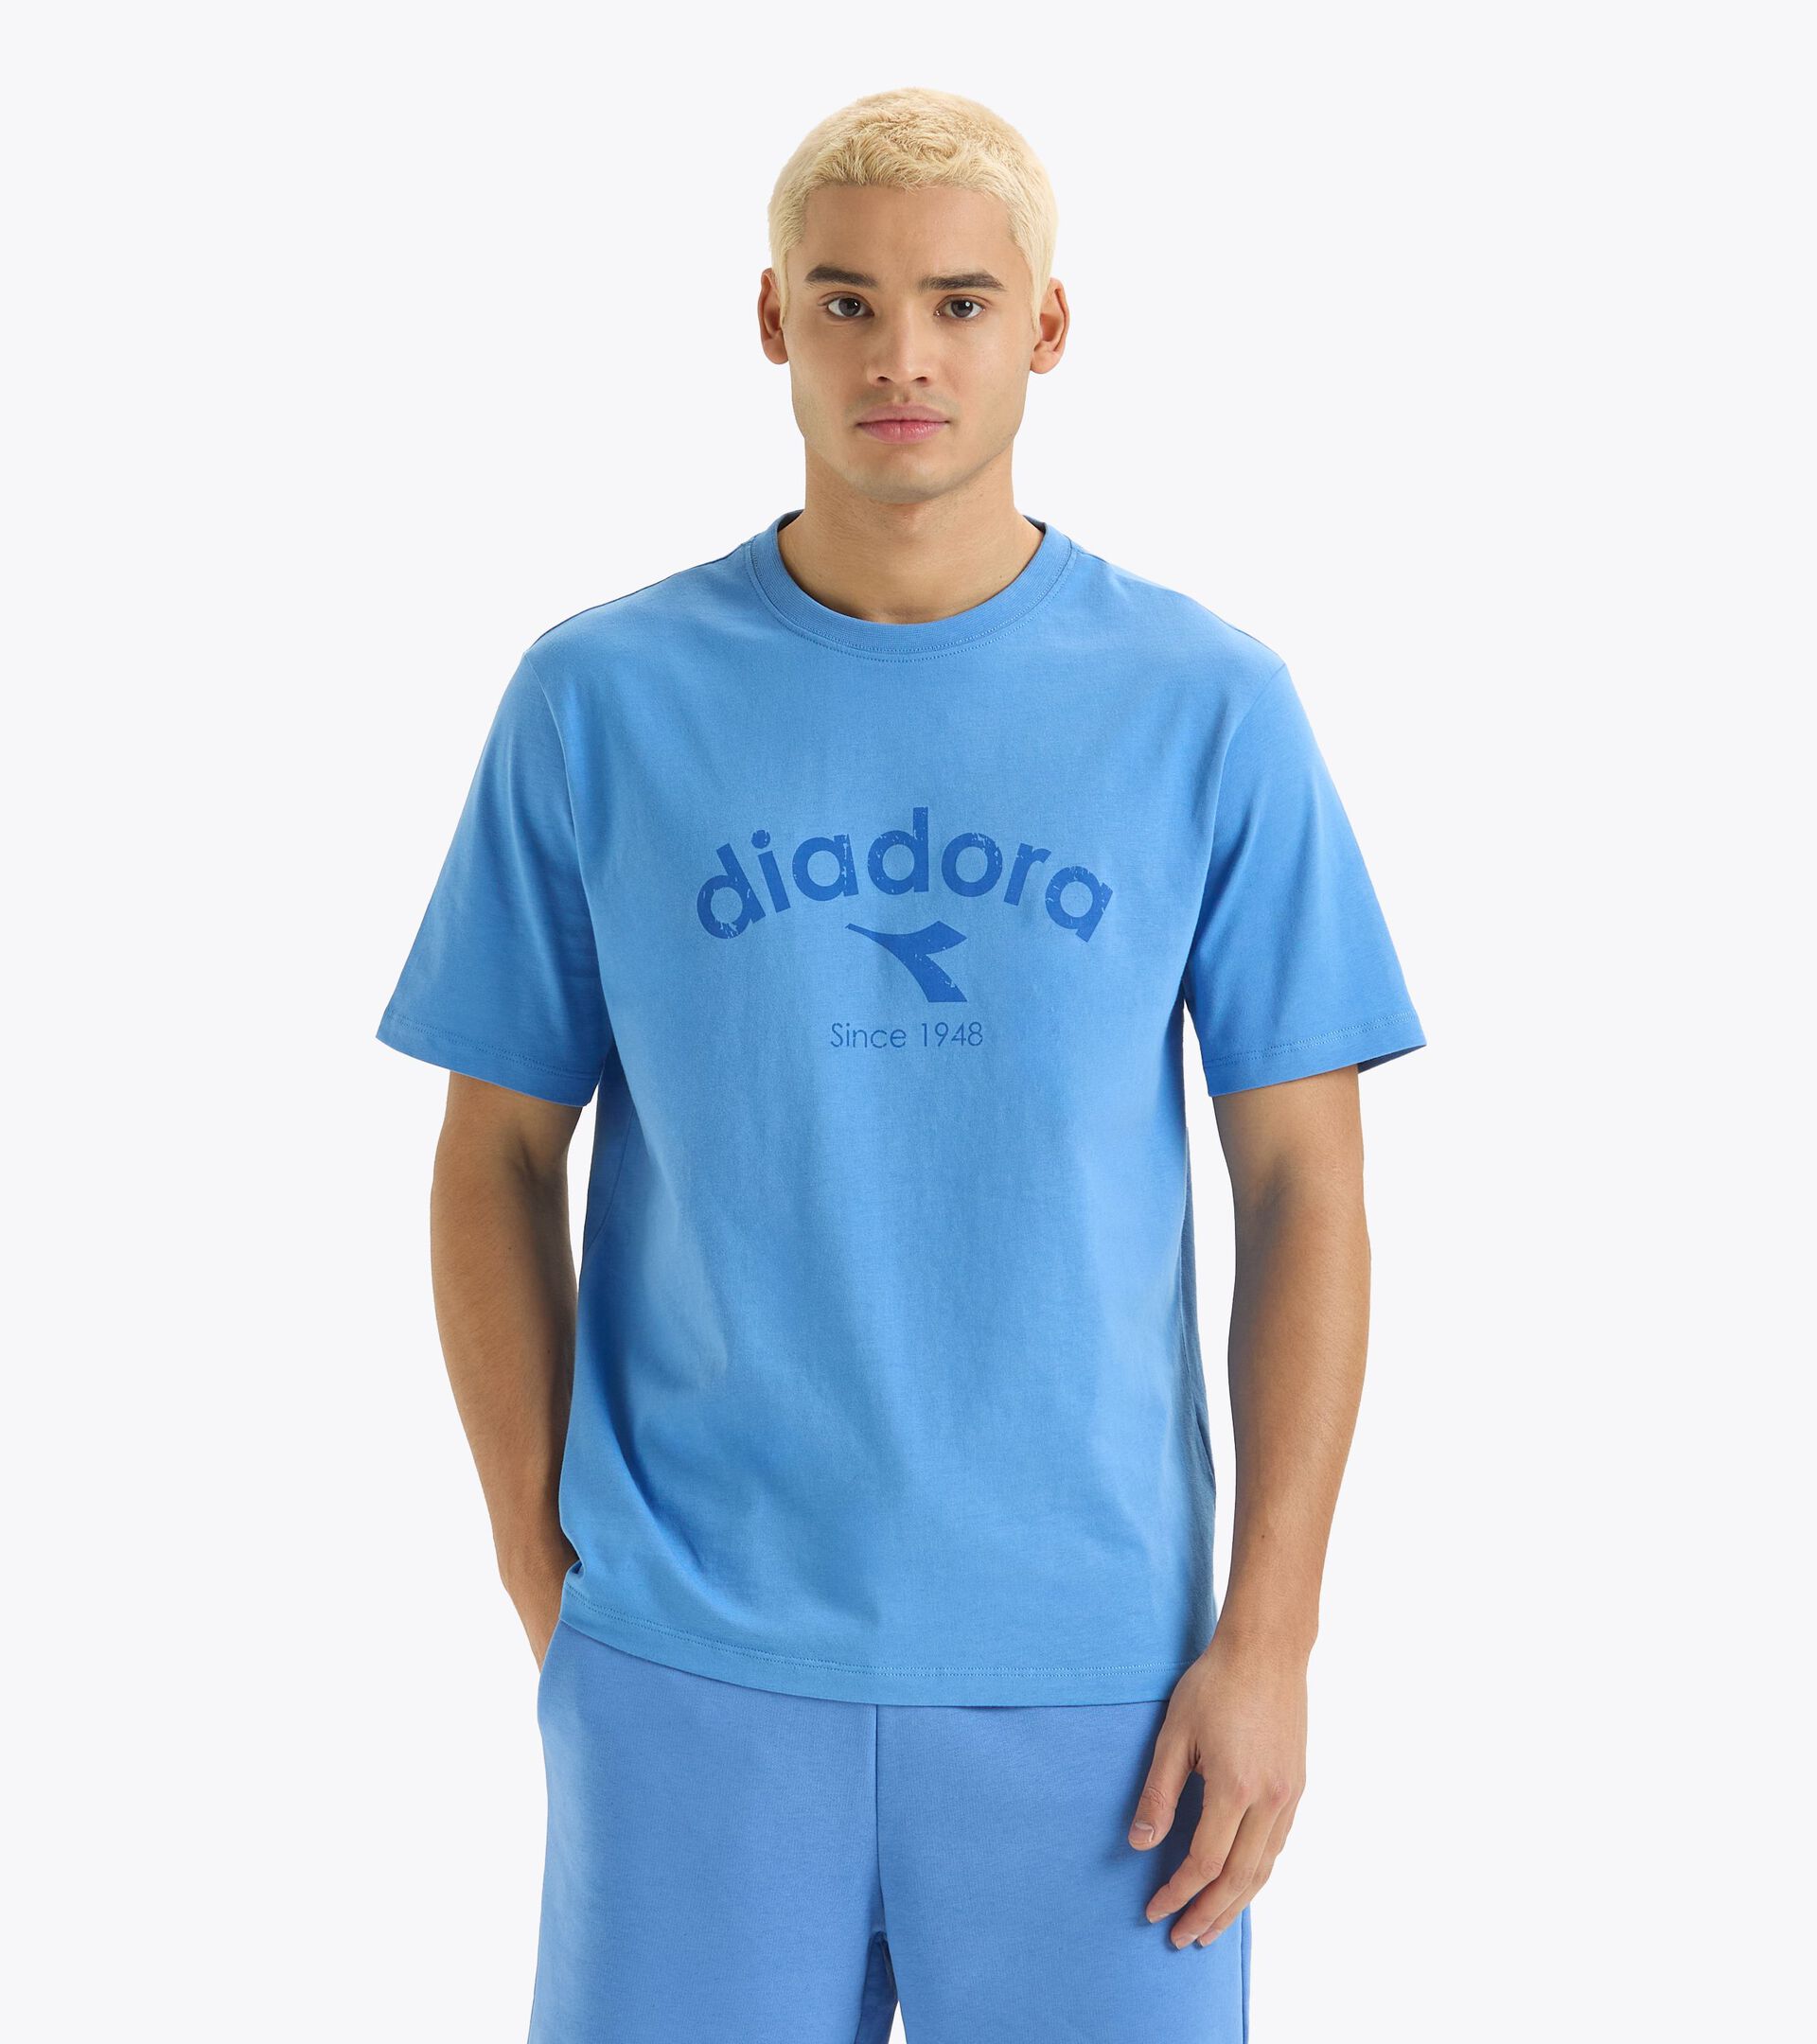 Camiseta - Gender neutral T-SHIRT SS ATHL. LOGO PACIFIC COAST - Diadora